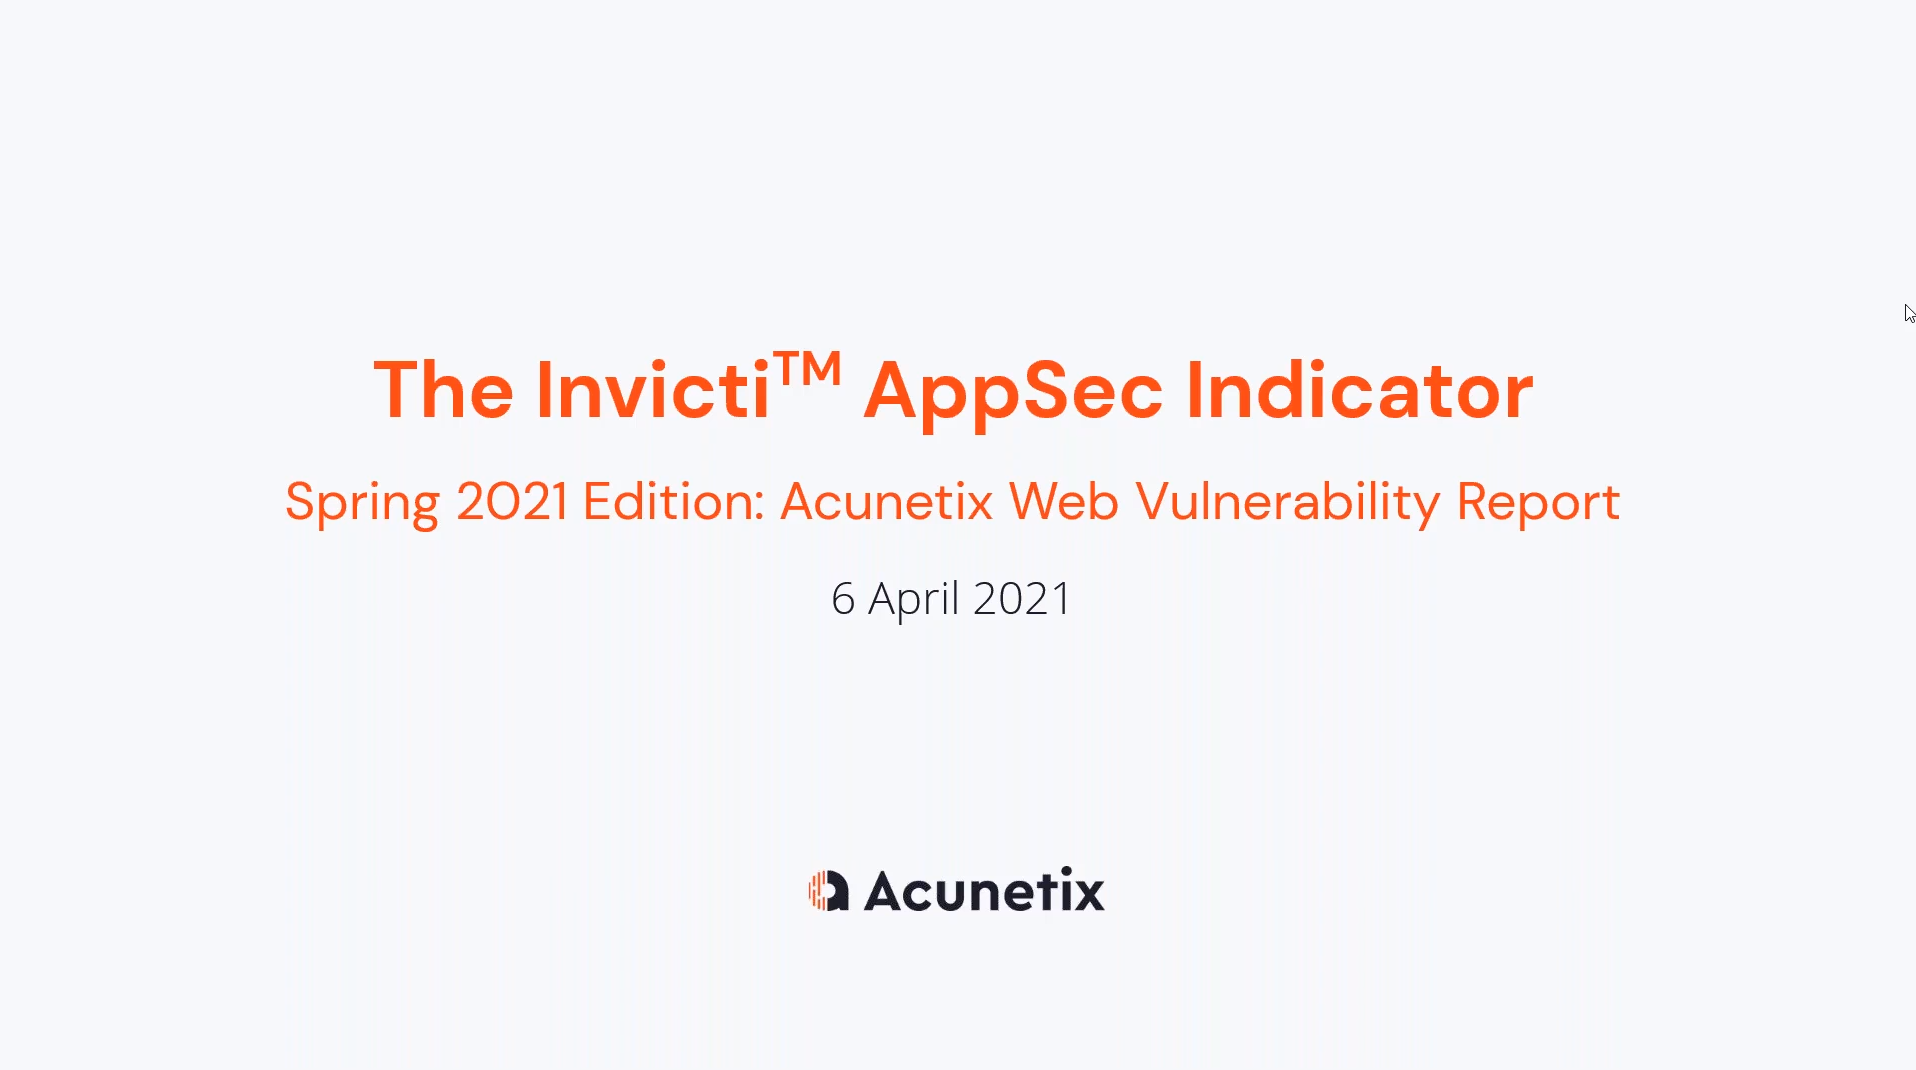 Invicti Appsec Indicator Spring 2021 Edition